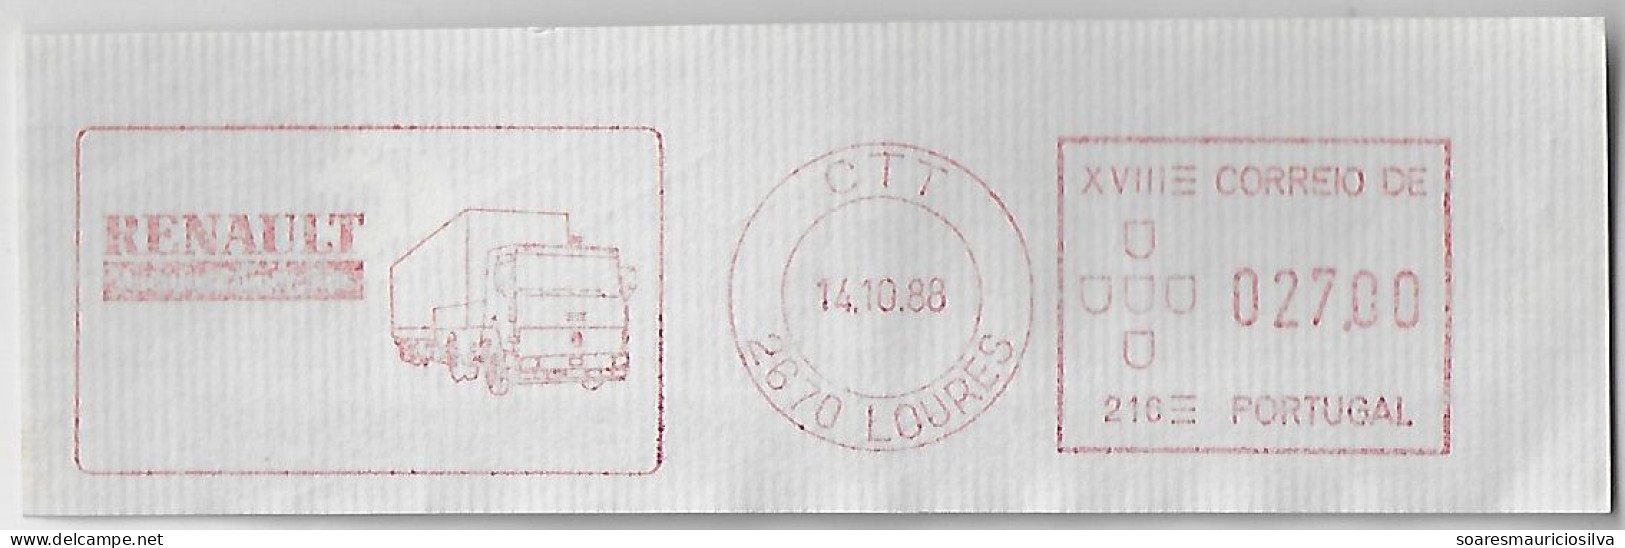 Portugal 1988 Cover Fragment Meter Stamp Hasler Mailmaster Slogan Renault Trucks From Loures - Trucks